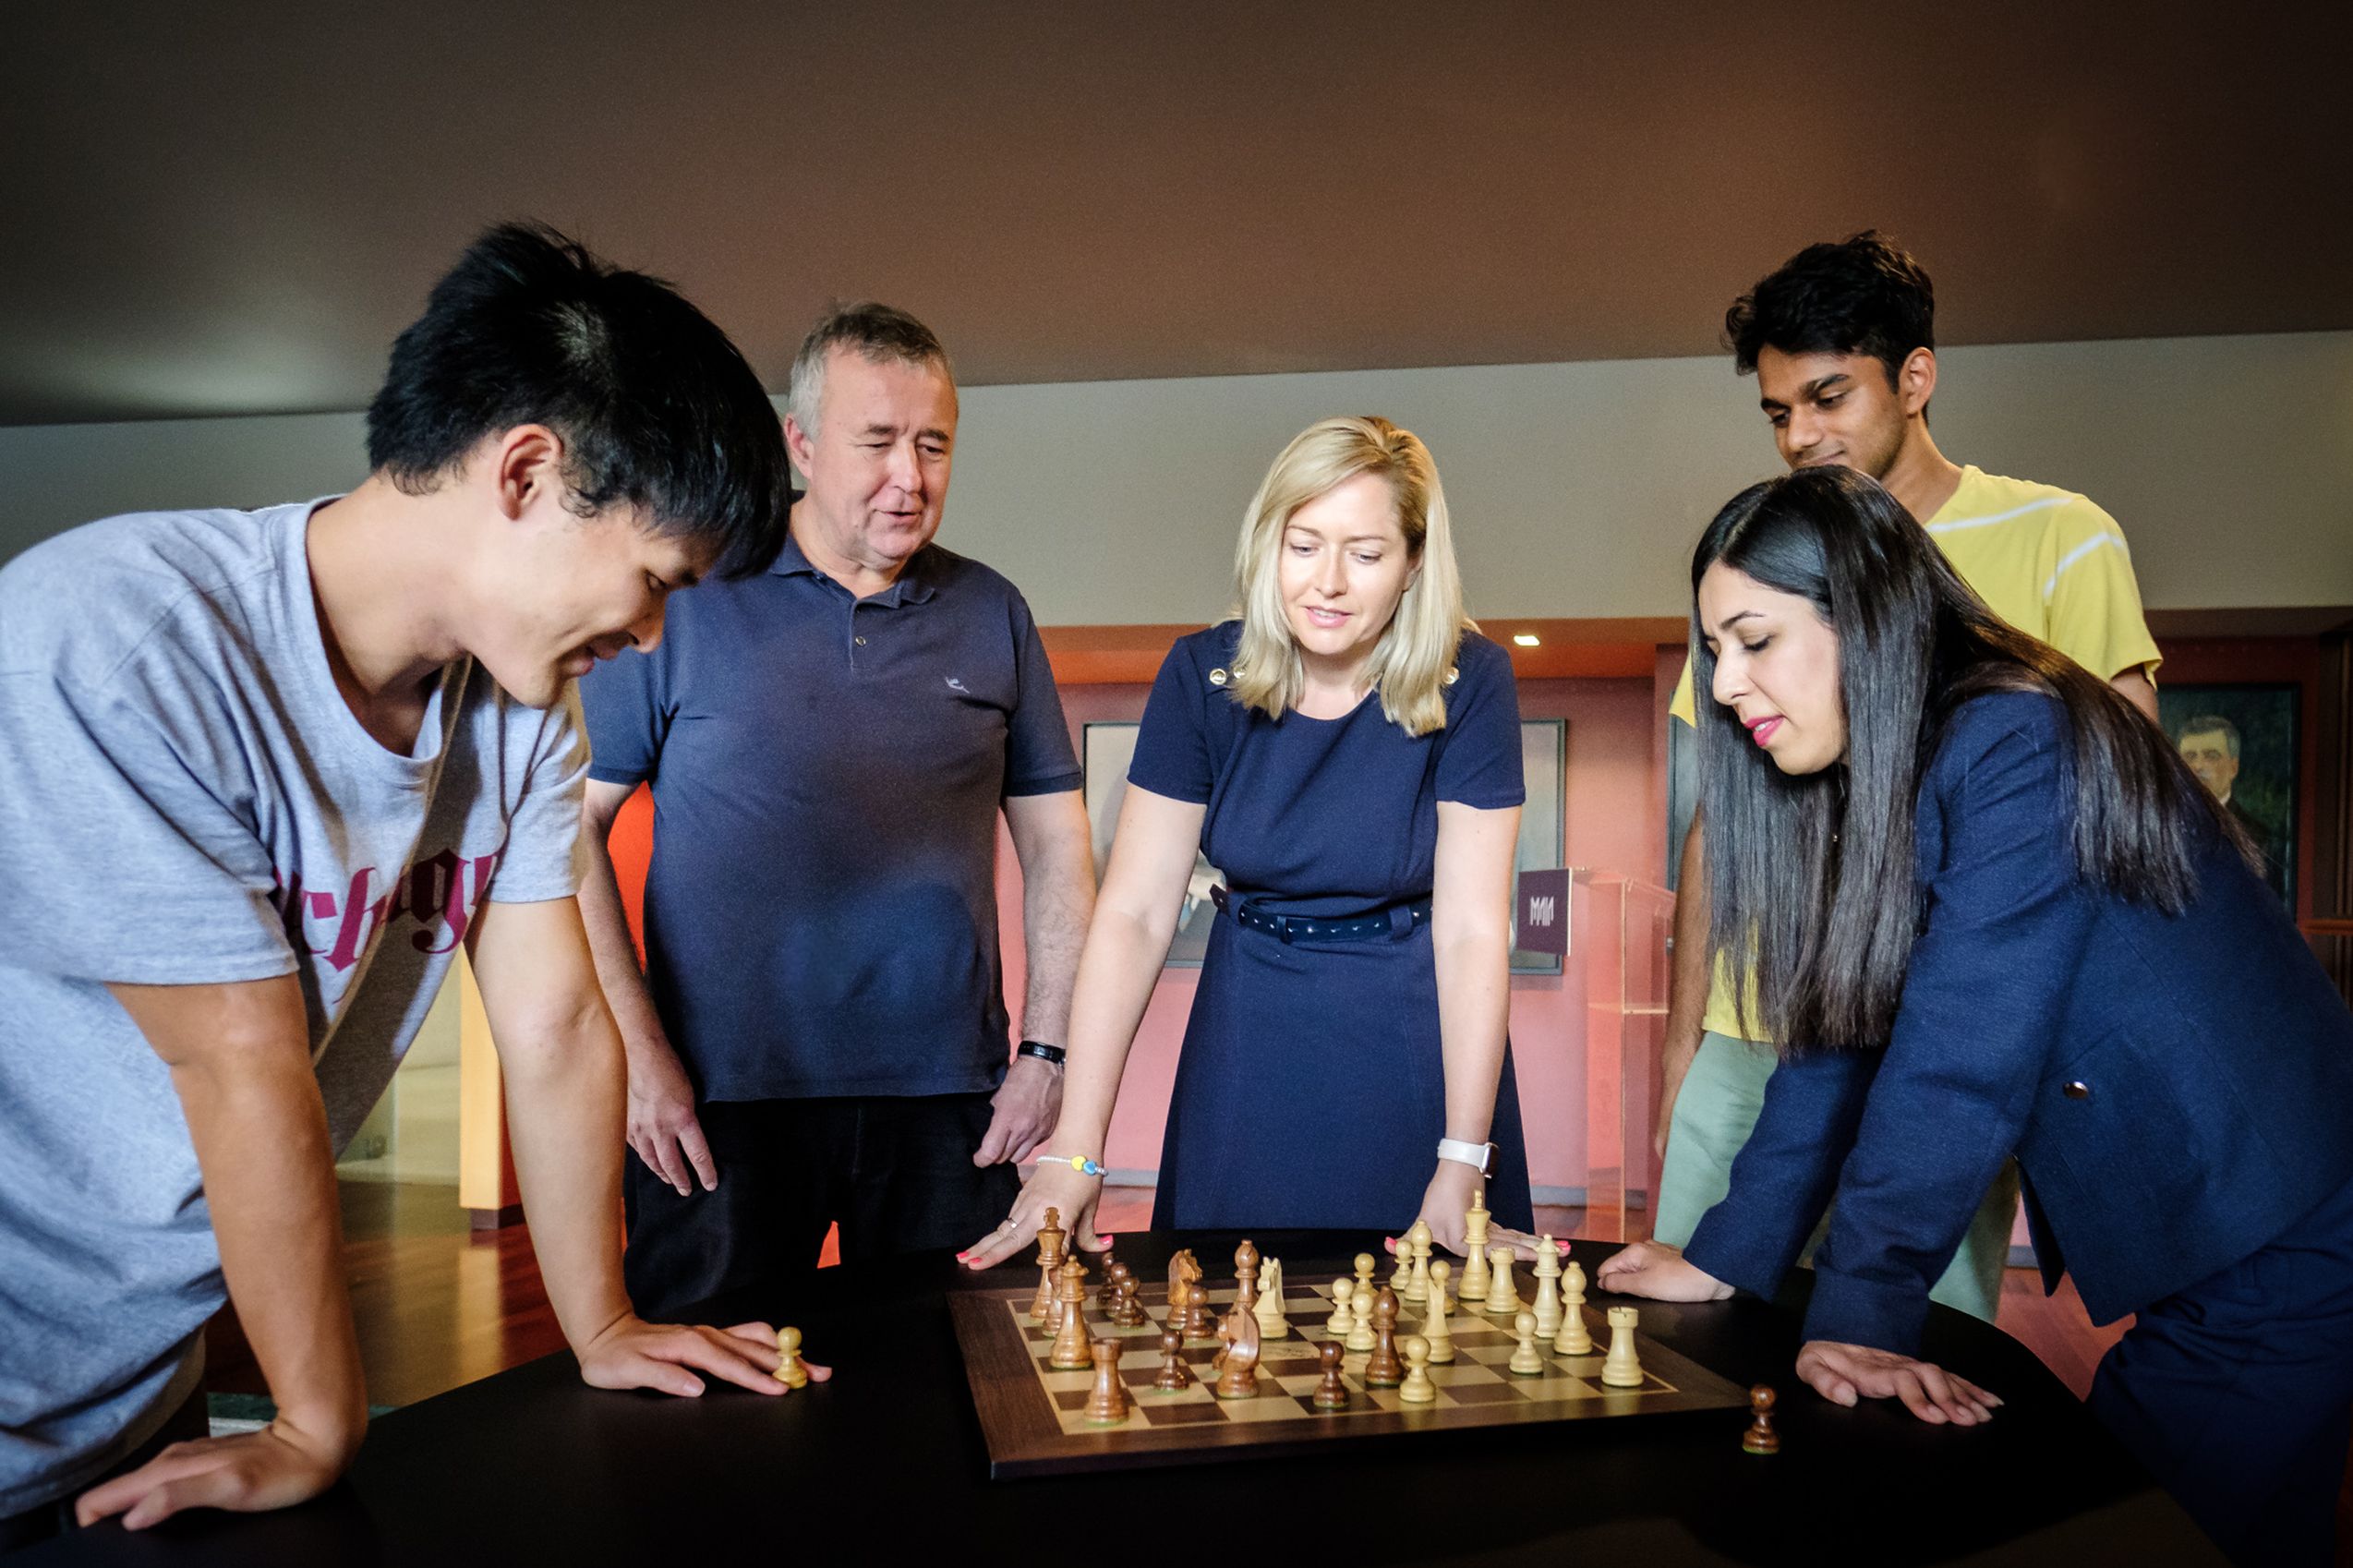 Jogadores de xadrez: Campeãs mundiais de xadrez, Campeões mundiais